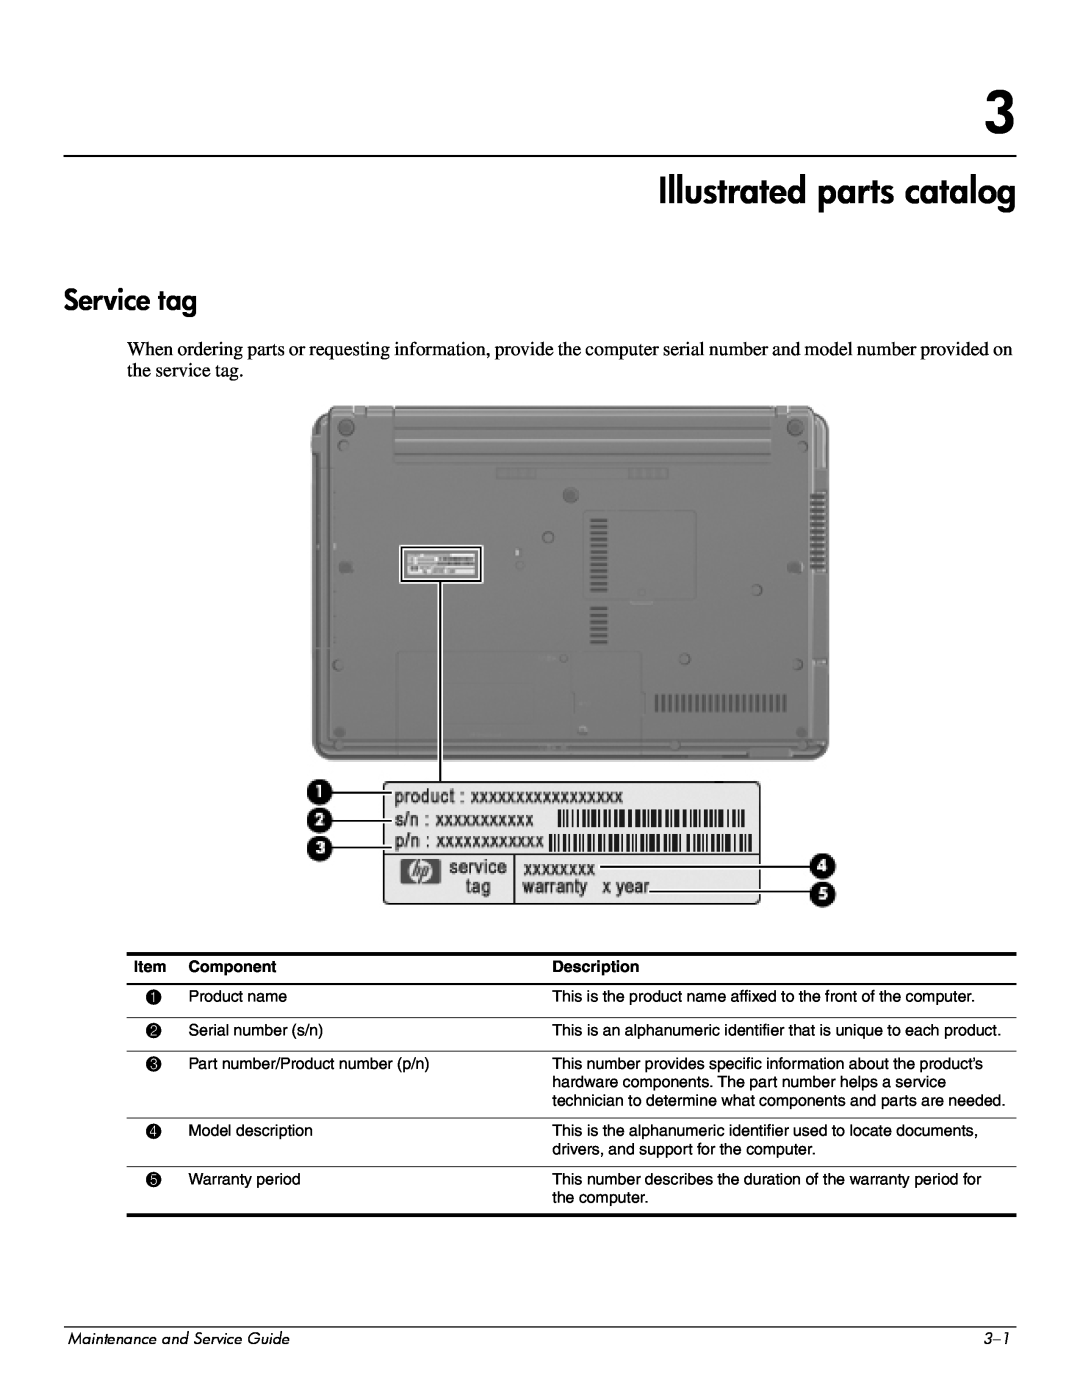 Compaq 515, 511, 510 manual Illustrated parts catalog, Service tag 